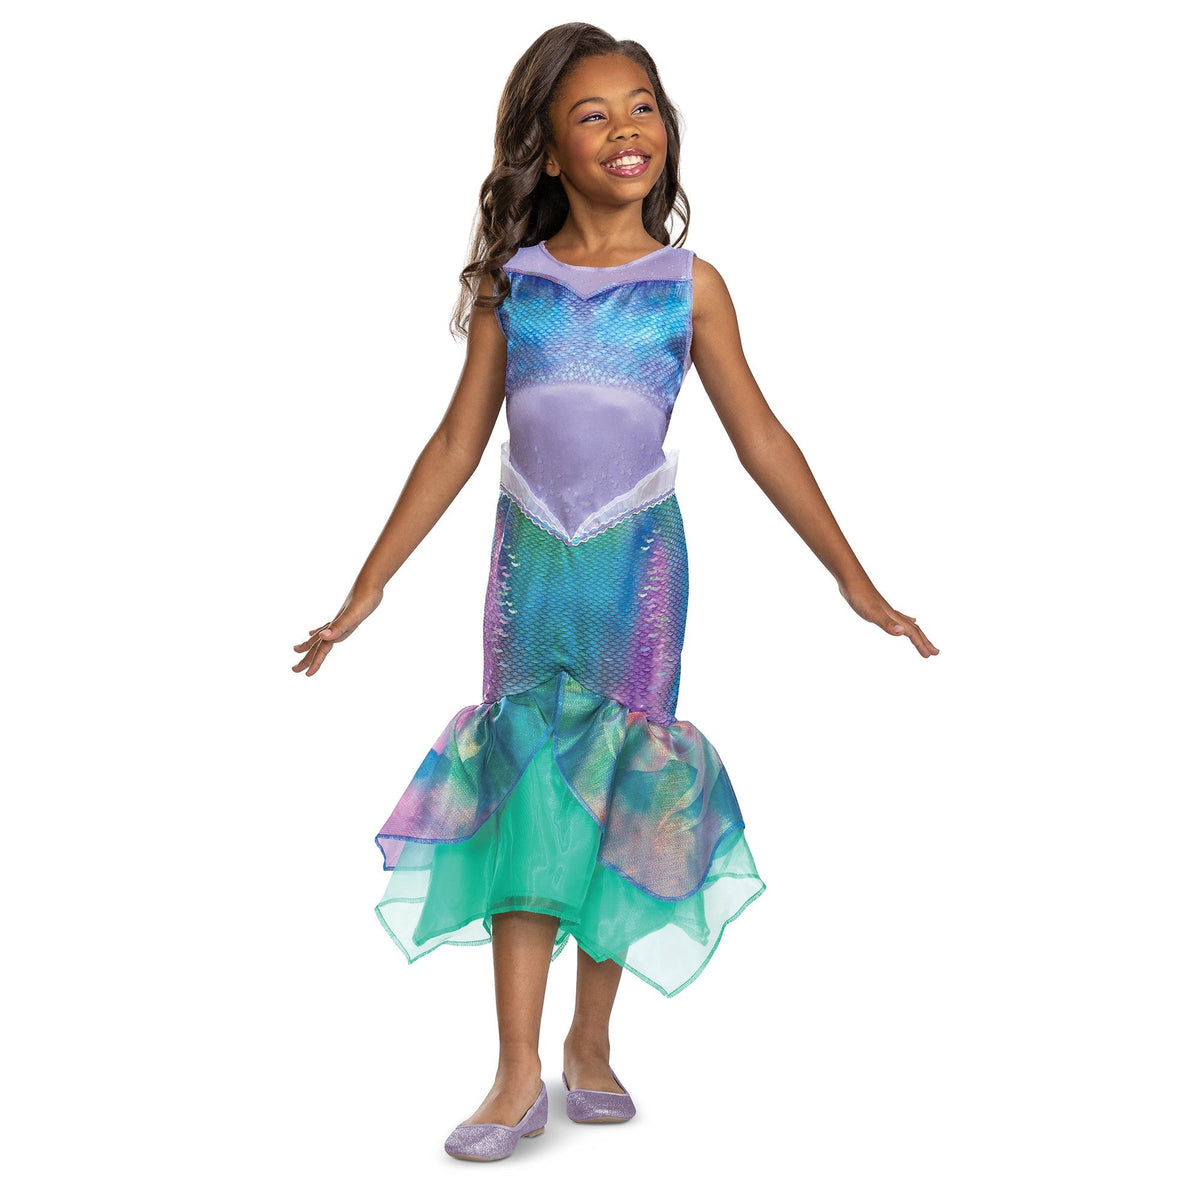 DISGUISE (TOY-SPORT) Costumes Disney Little Mermaid Ariel Classic Dress Costume for Kids, Mermaid Dress